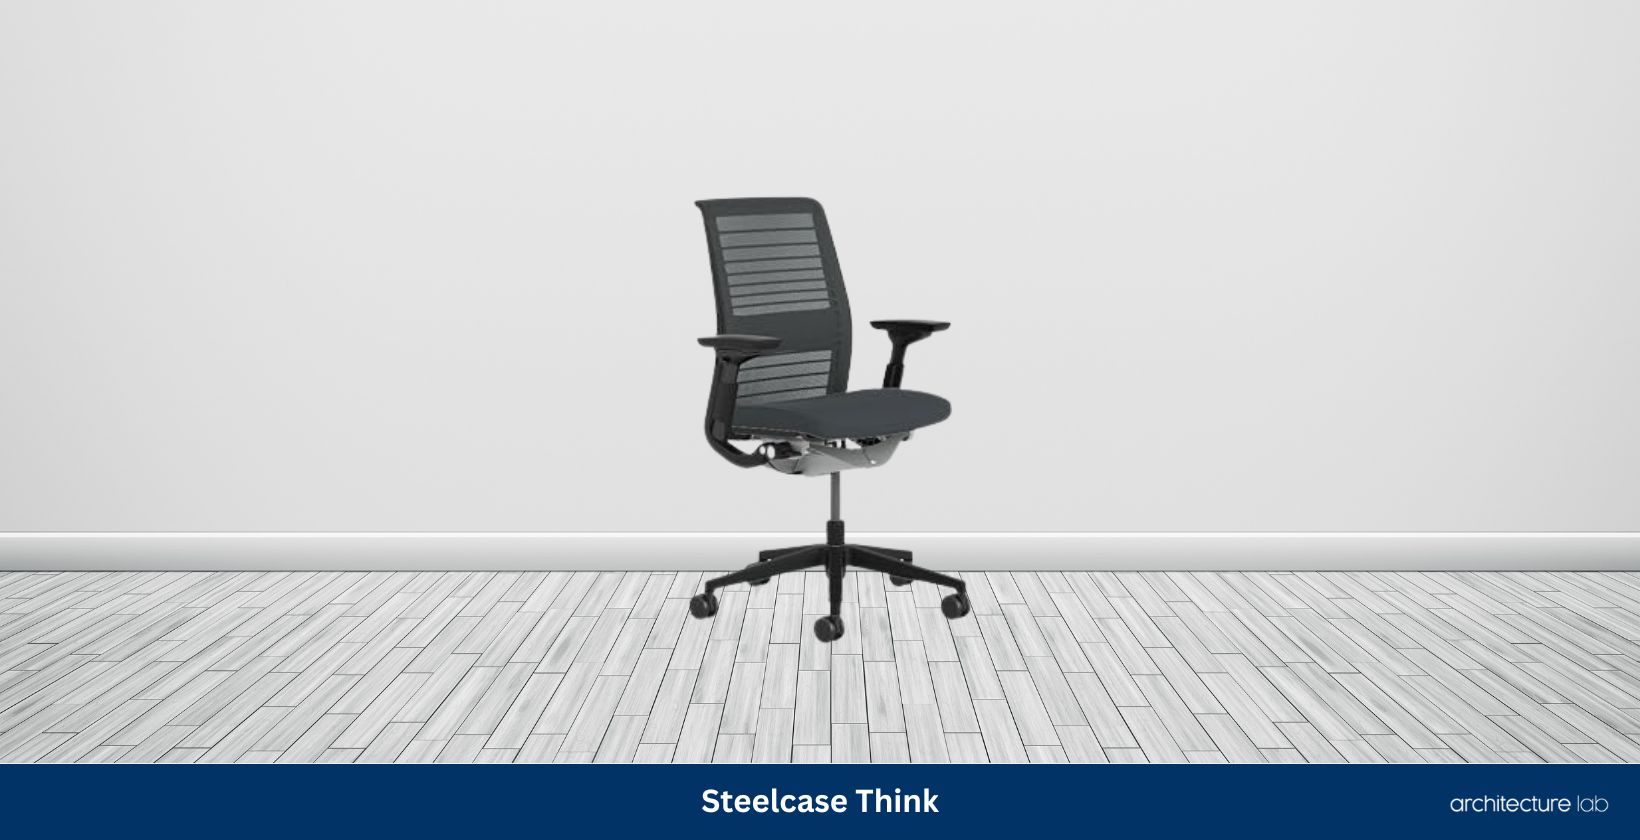 Steelcase think